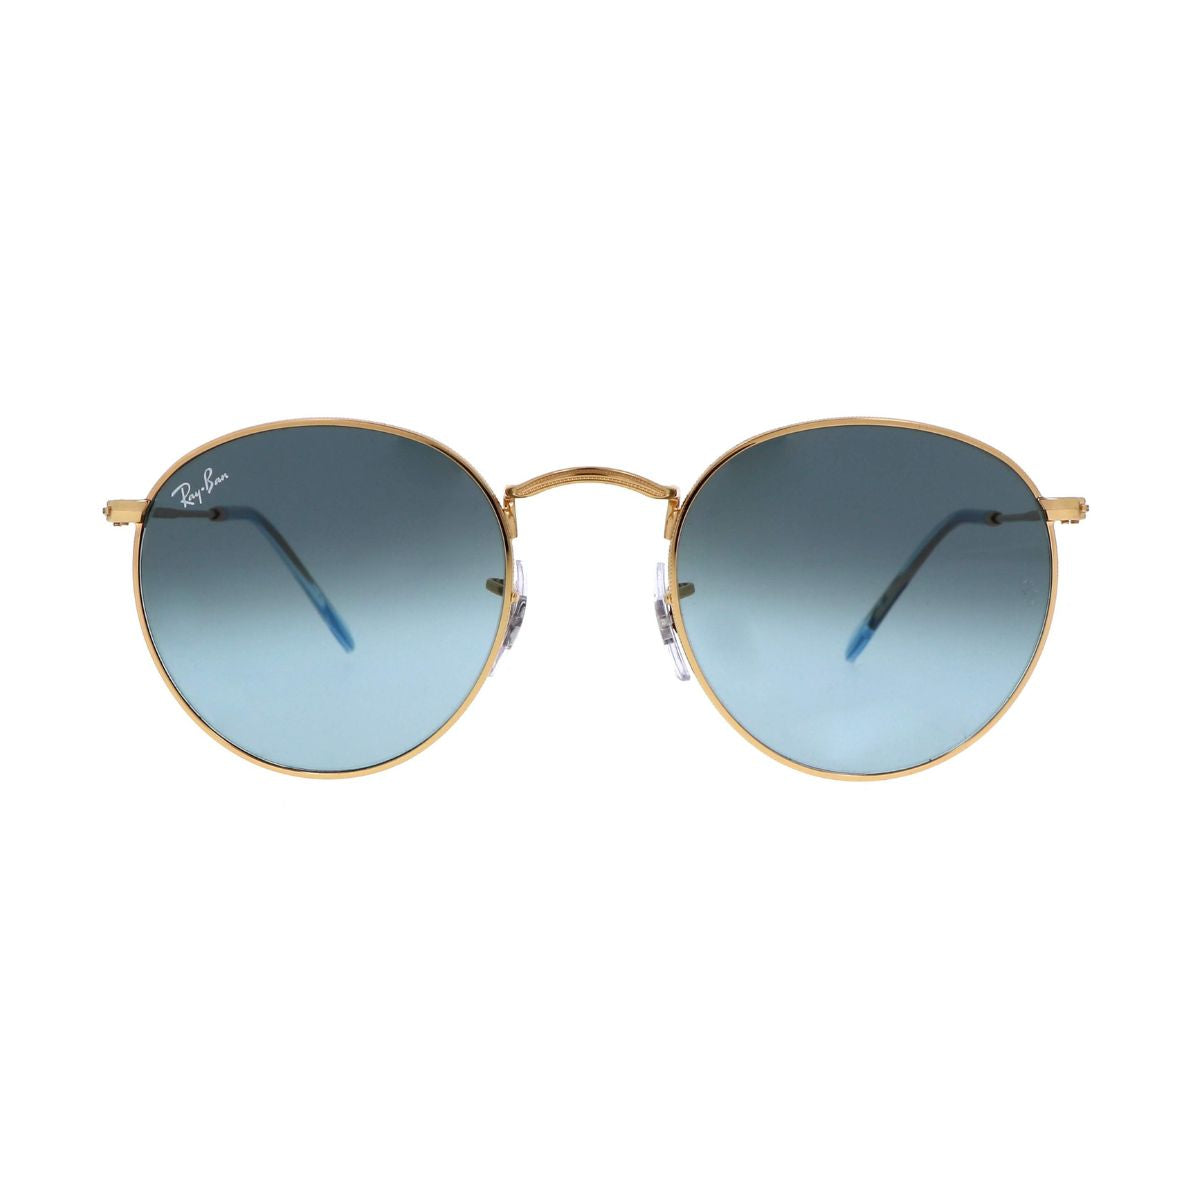 "Buy Rayban 3447 001/3M UV Resistant Circle Sunglasses for Men Online At Optorium"




